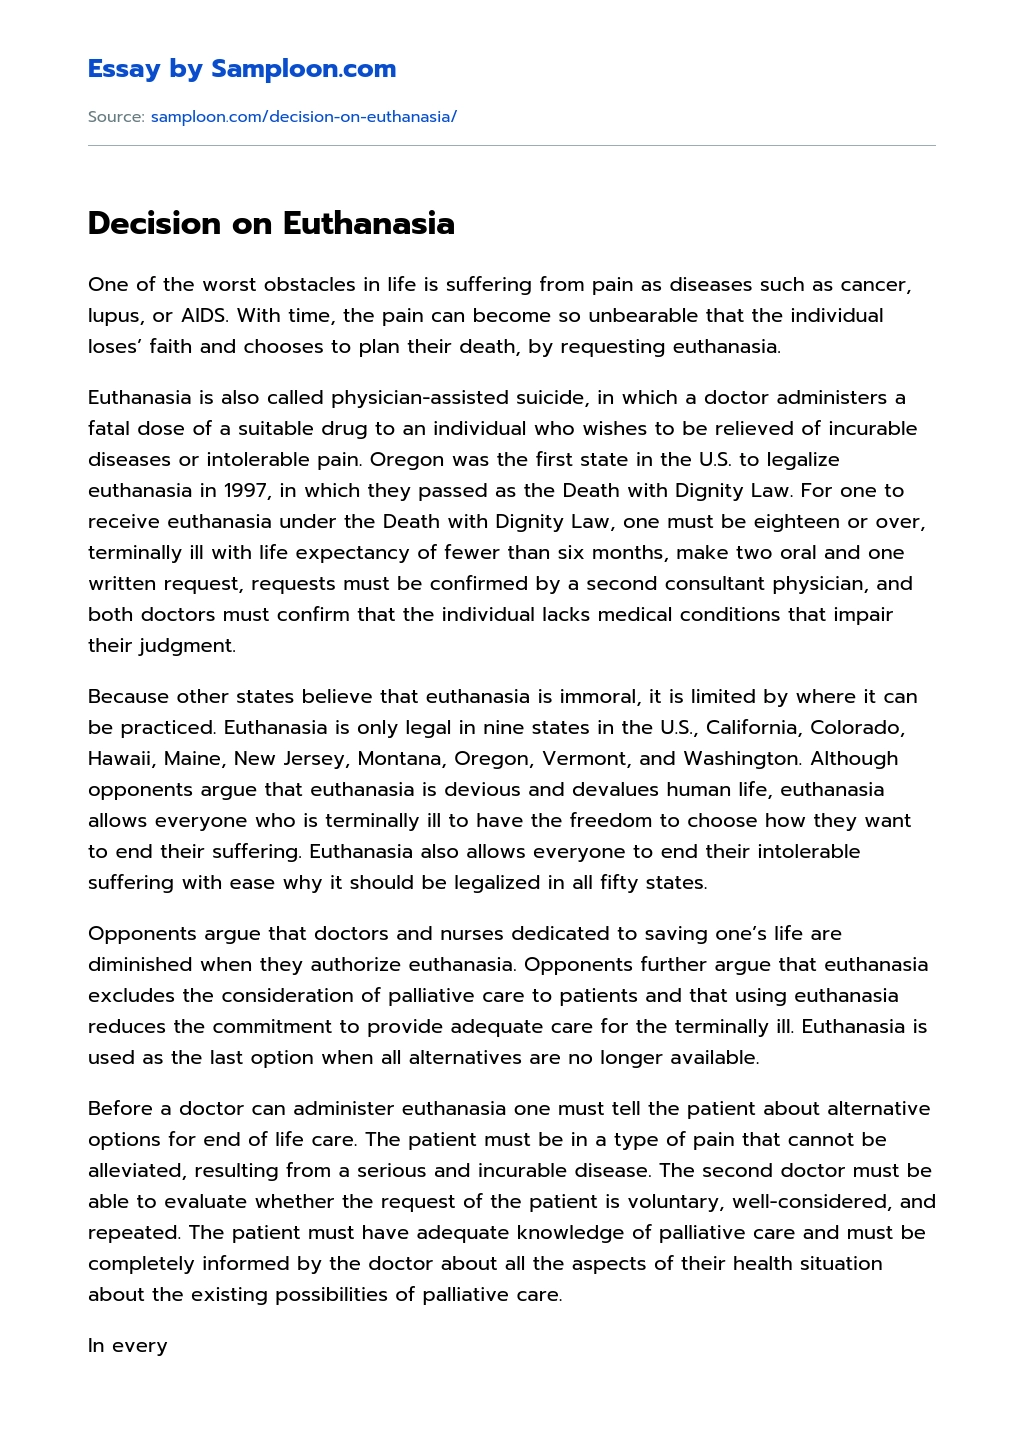 Decision on Euthanasia essay